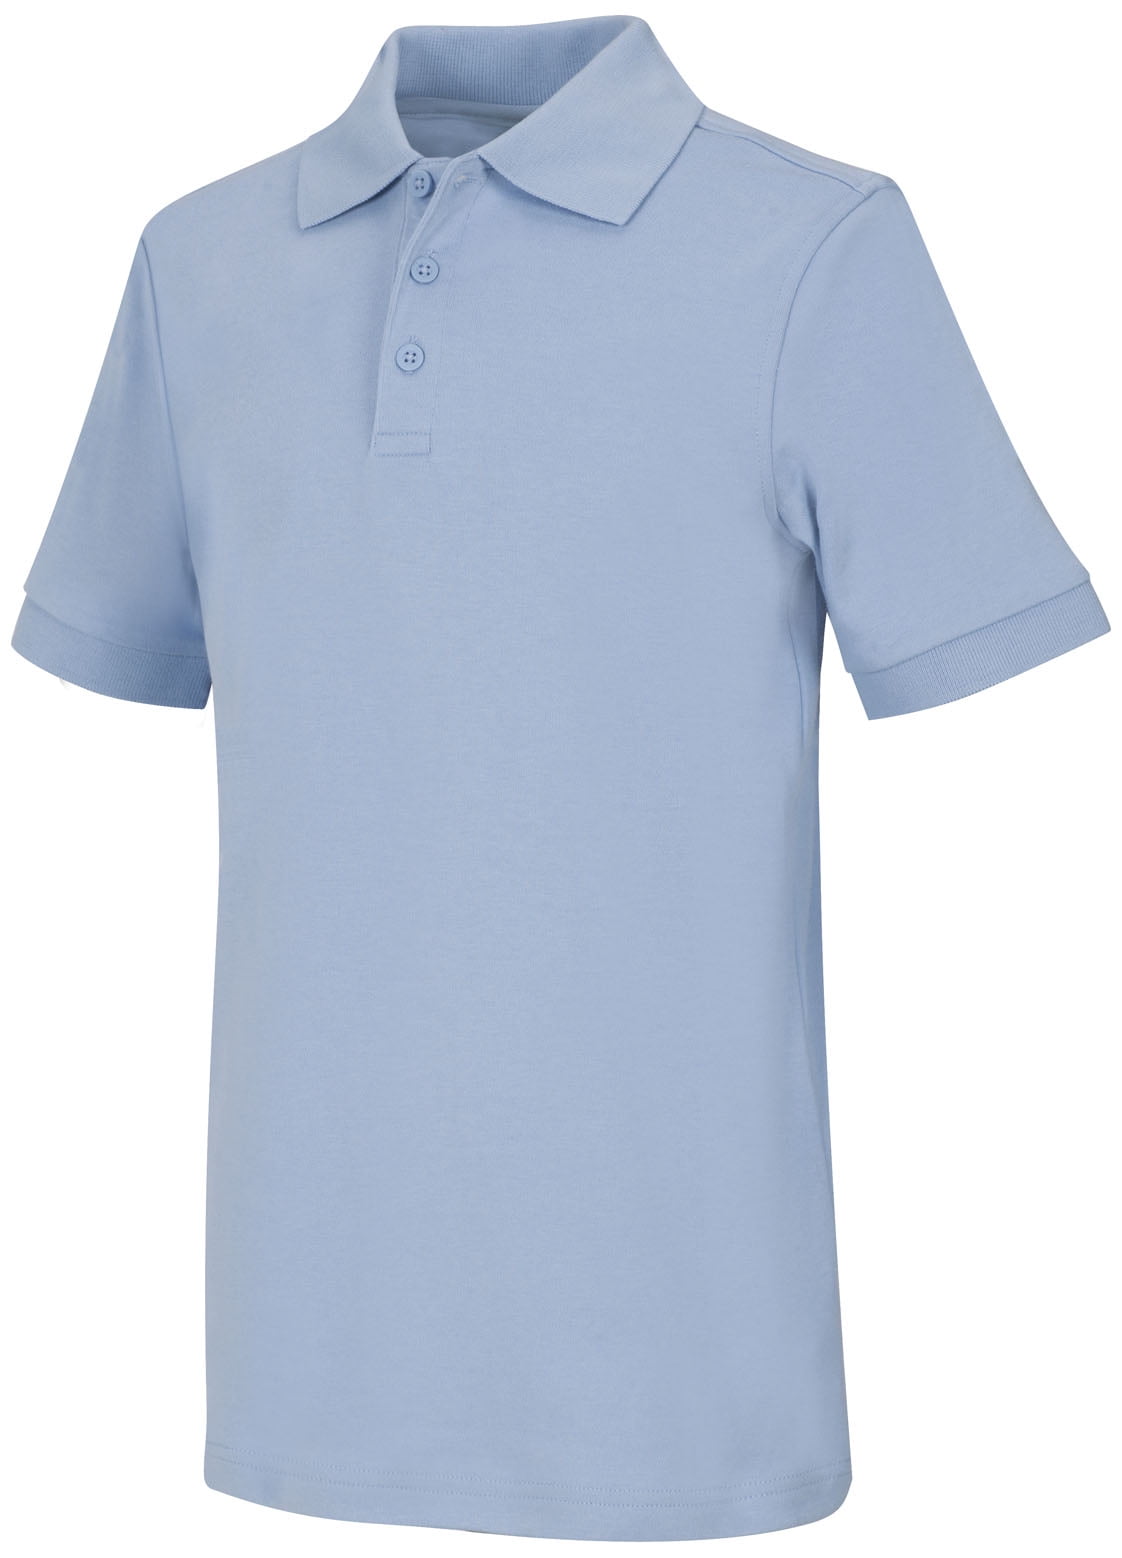 CLASSROOM Boys' Uniform Short Sleeve Interlock Polo 